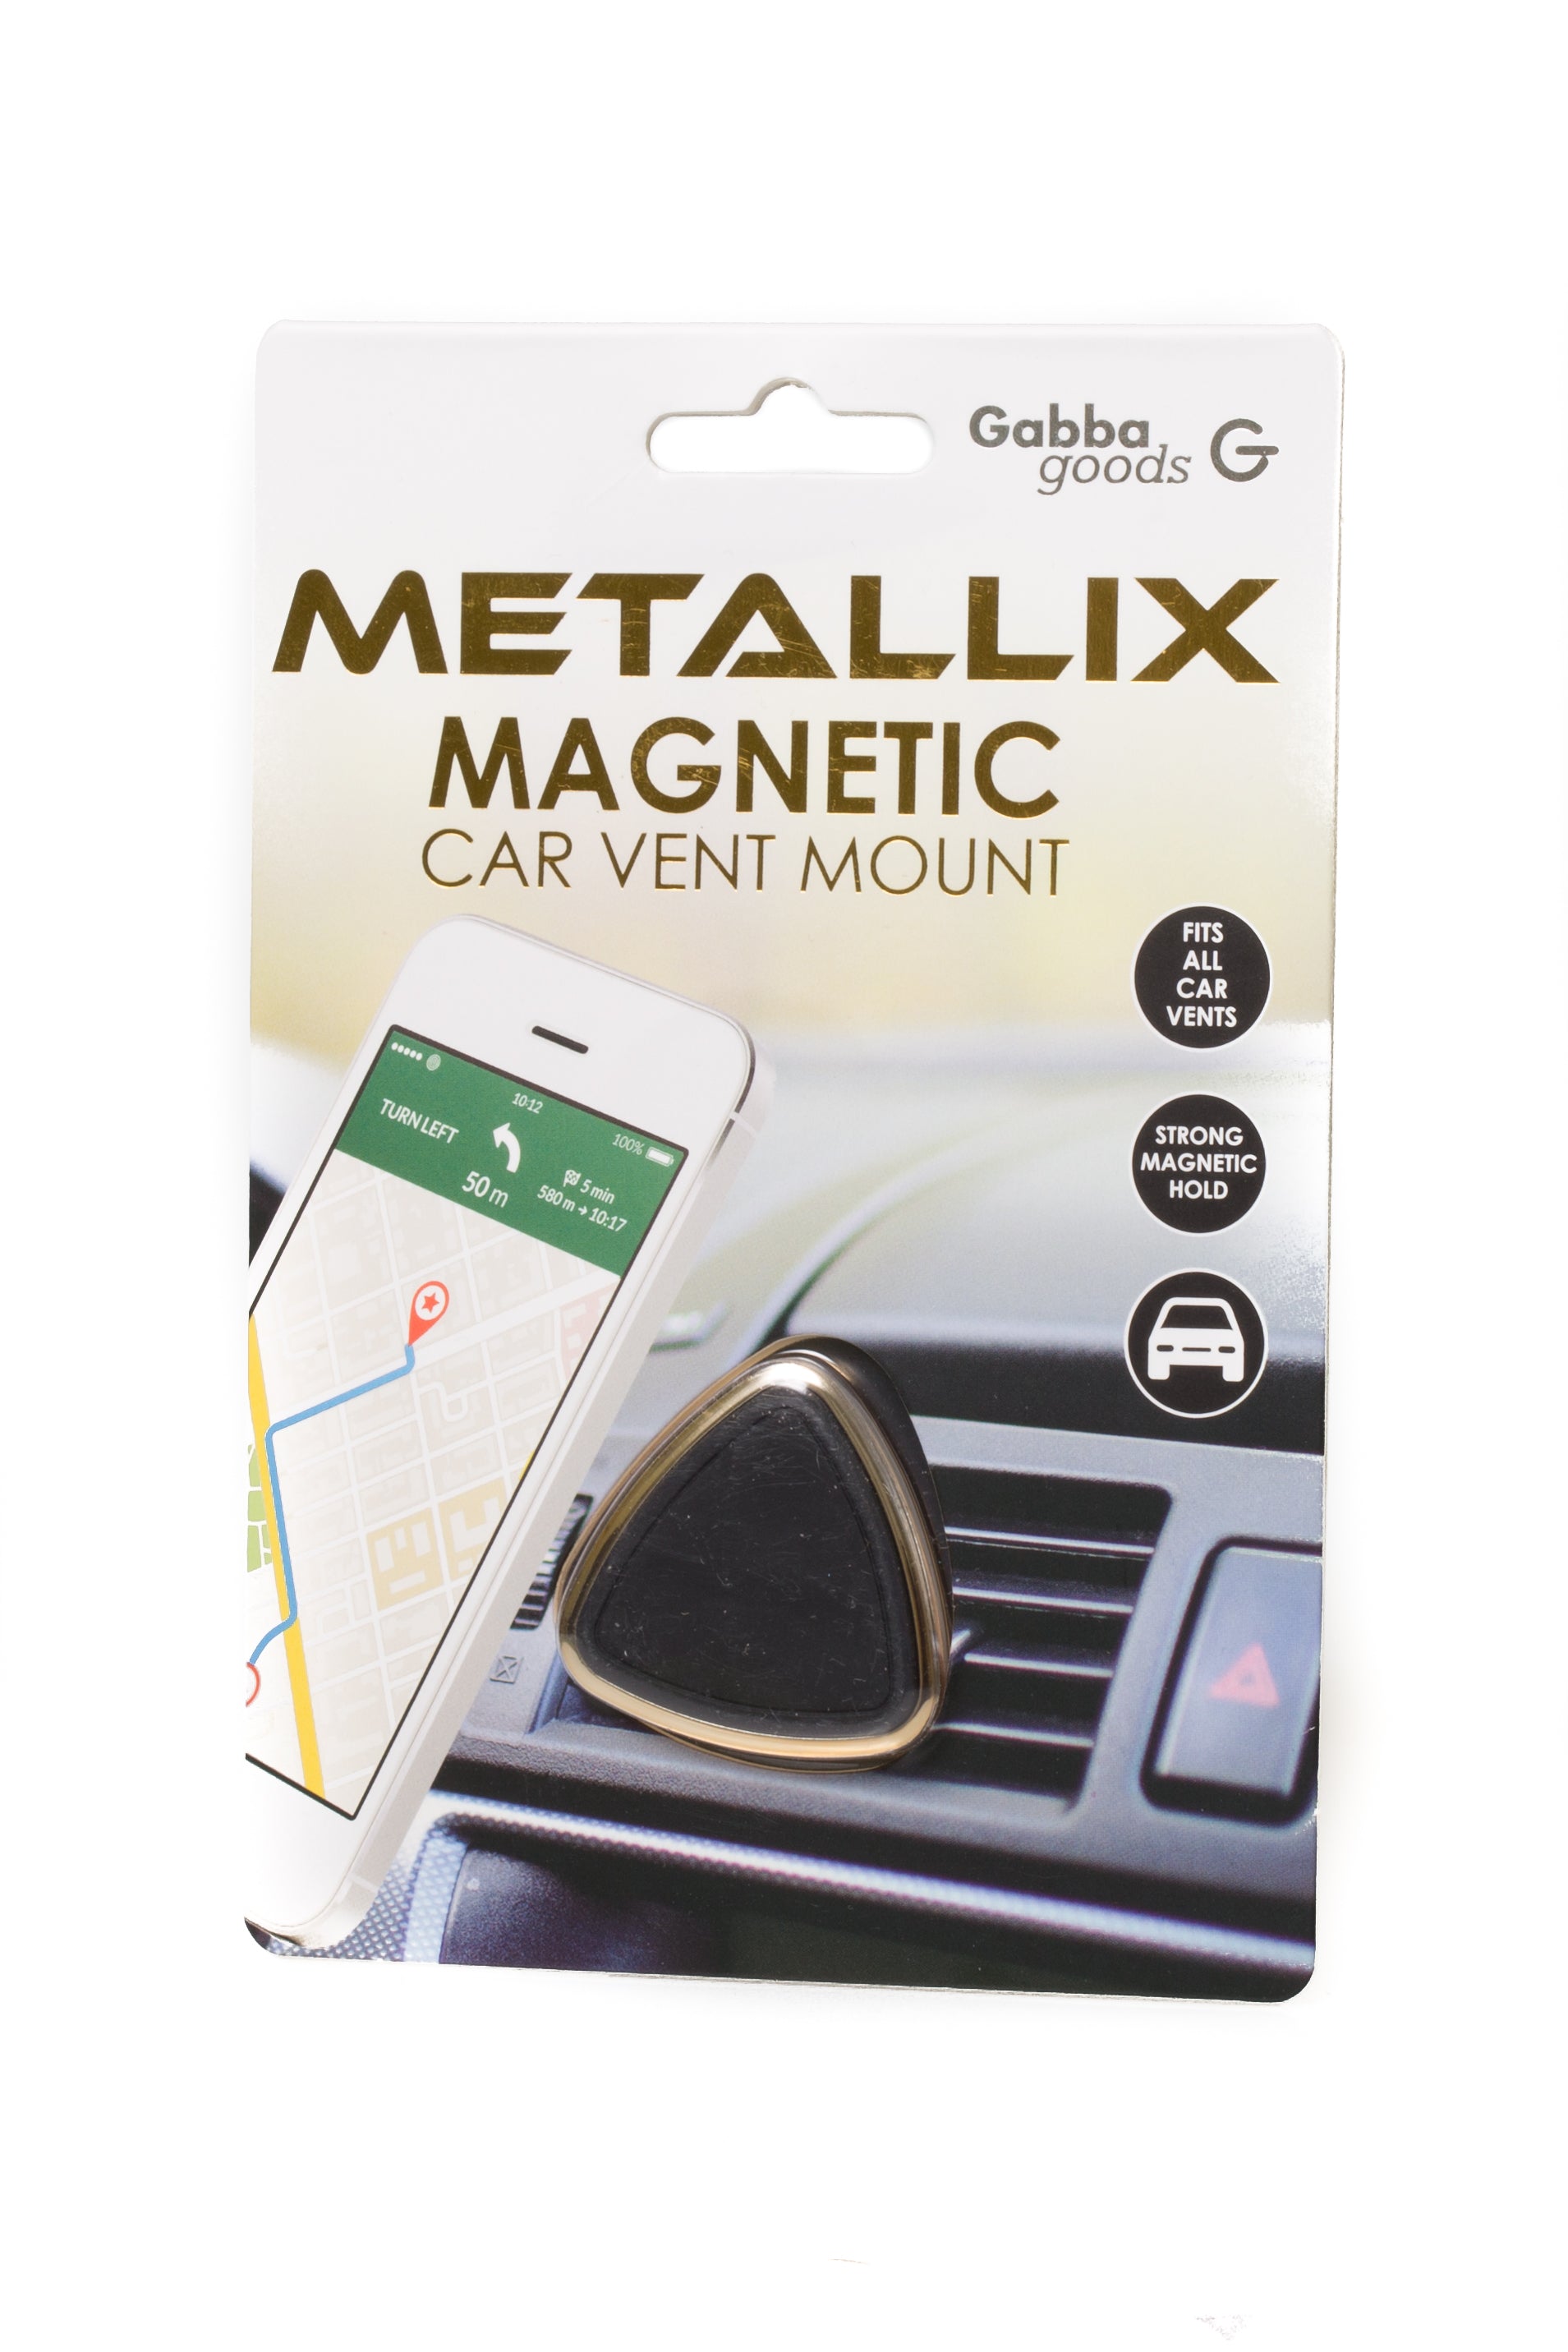 Metallix Magnetic Car Vent Mount